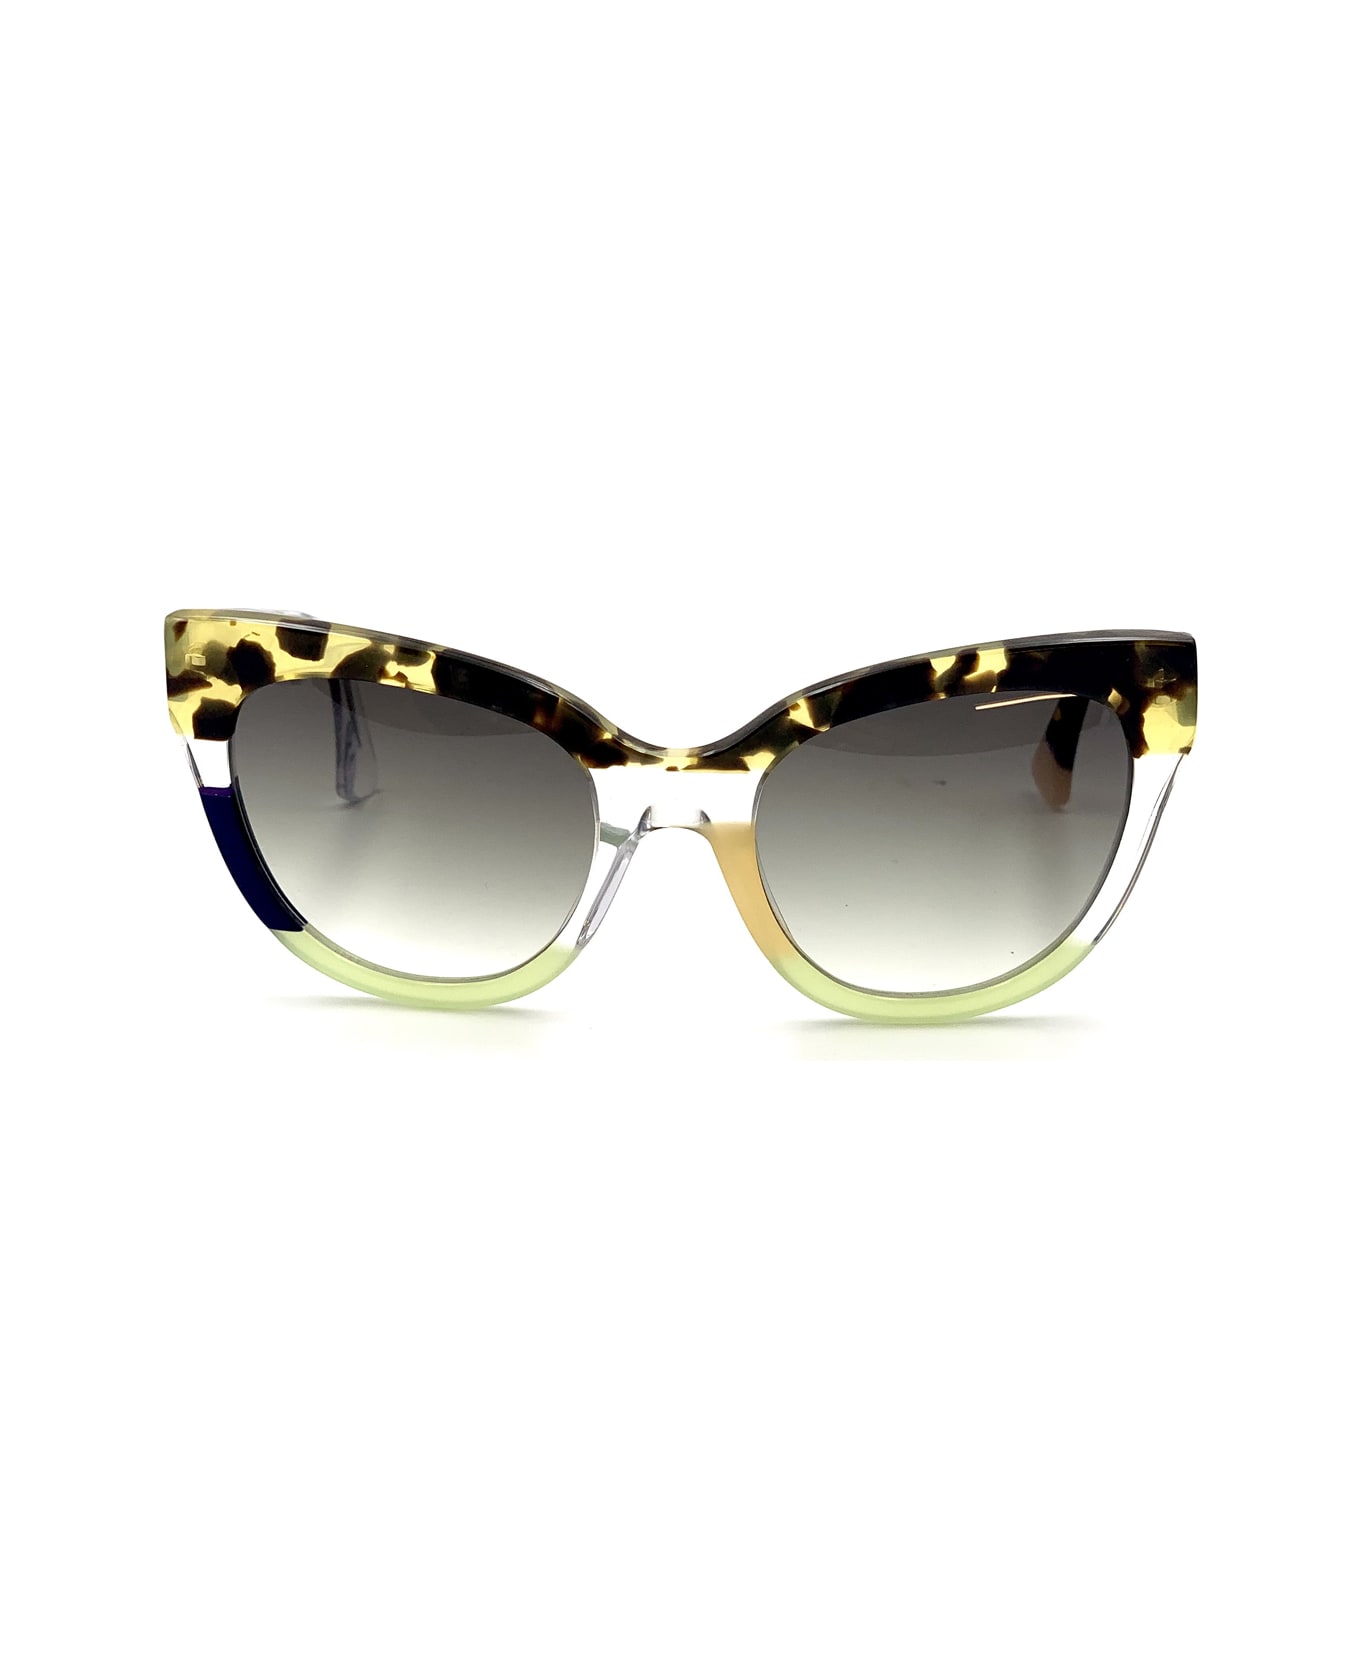 Silvian Heach Twink Pheach Work Sunglasses - Multicolore